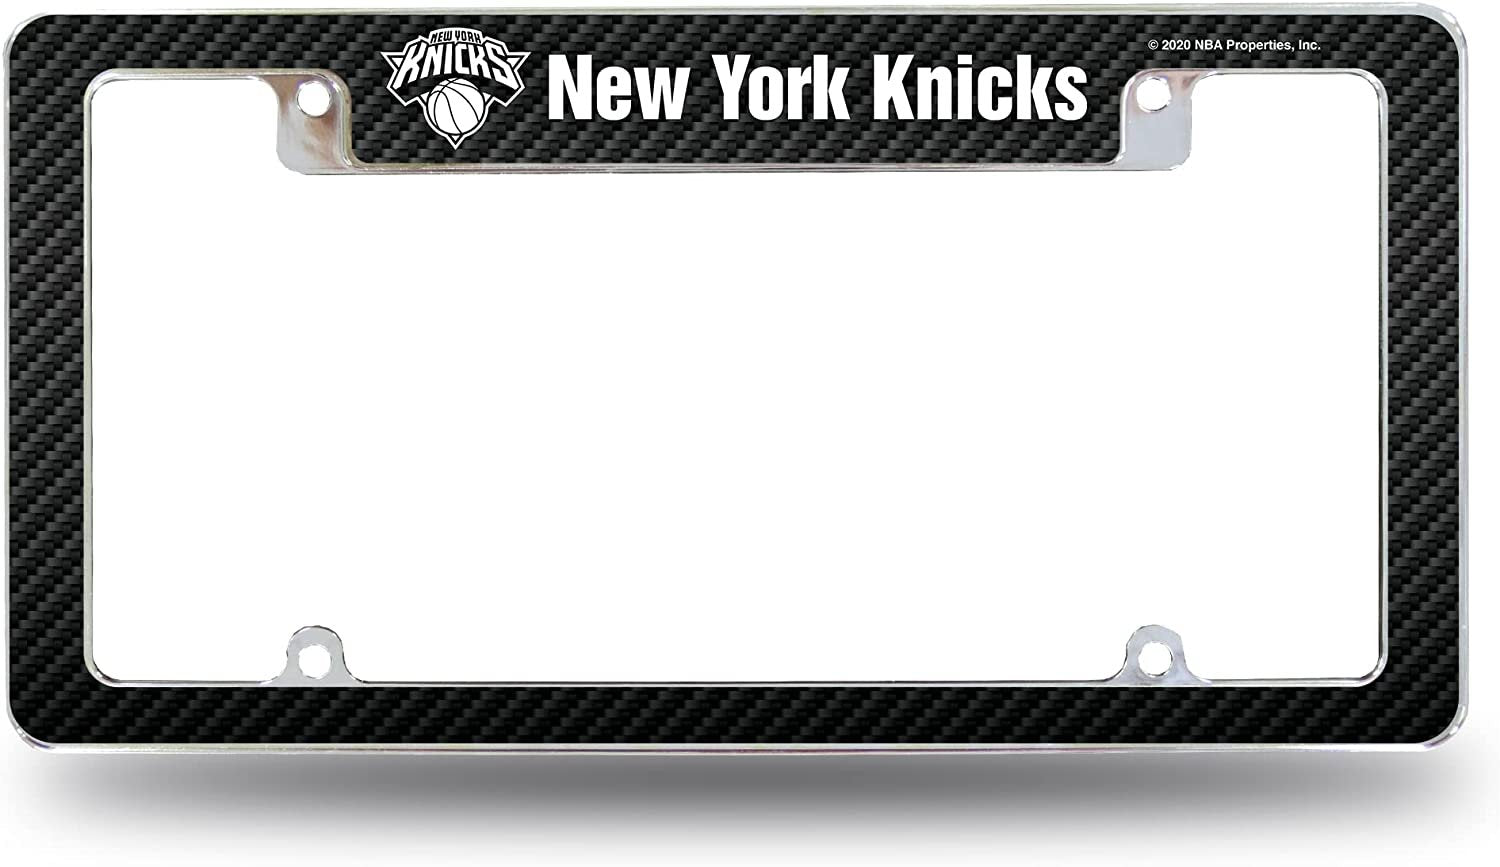 New York Knicks Metal License Plate Frame Chrome Tag Cover Carbon Fiber Design 6x12 Inch